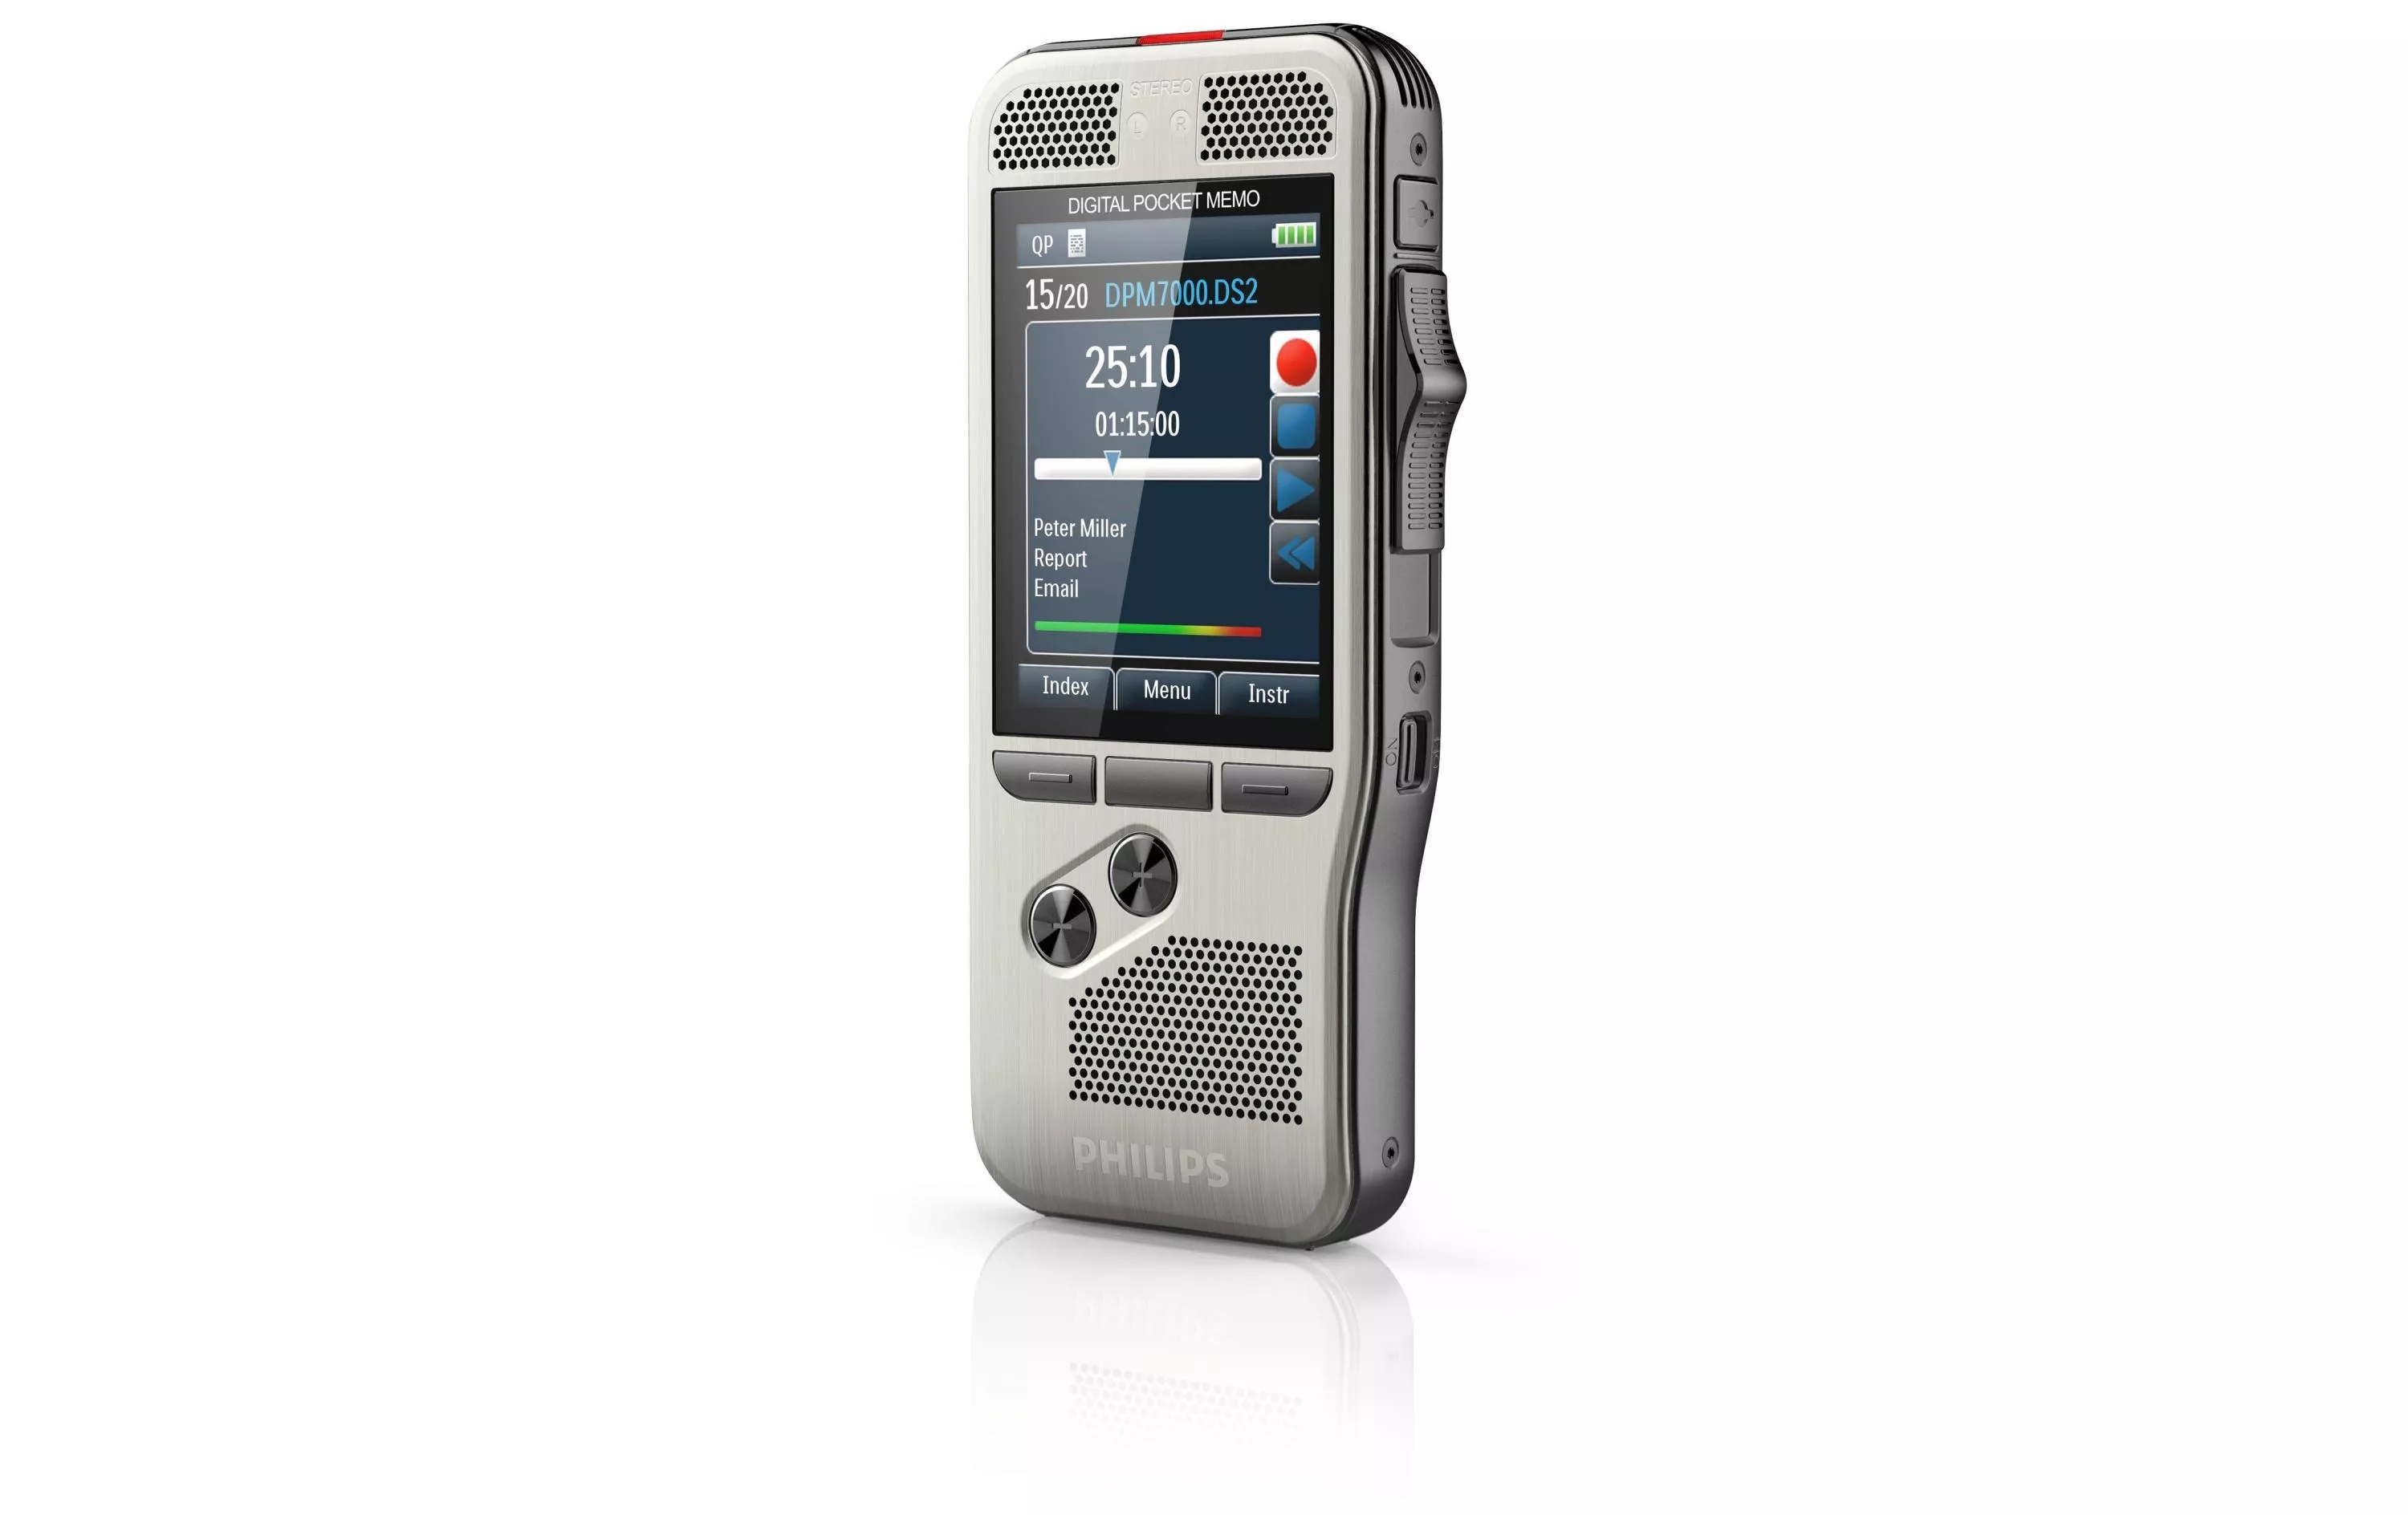 Dictaphone Digital Pocket Memo DPM7000